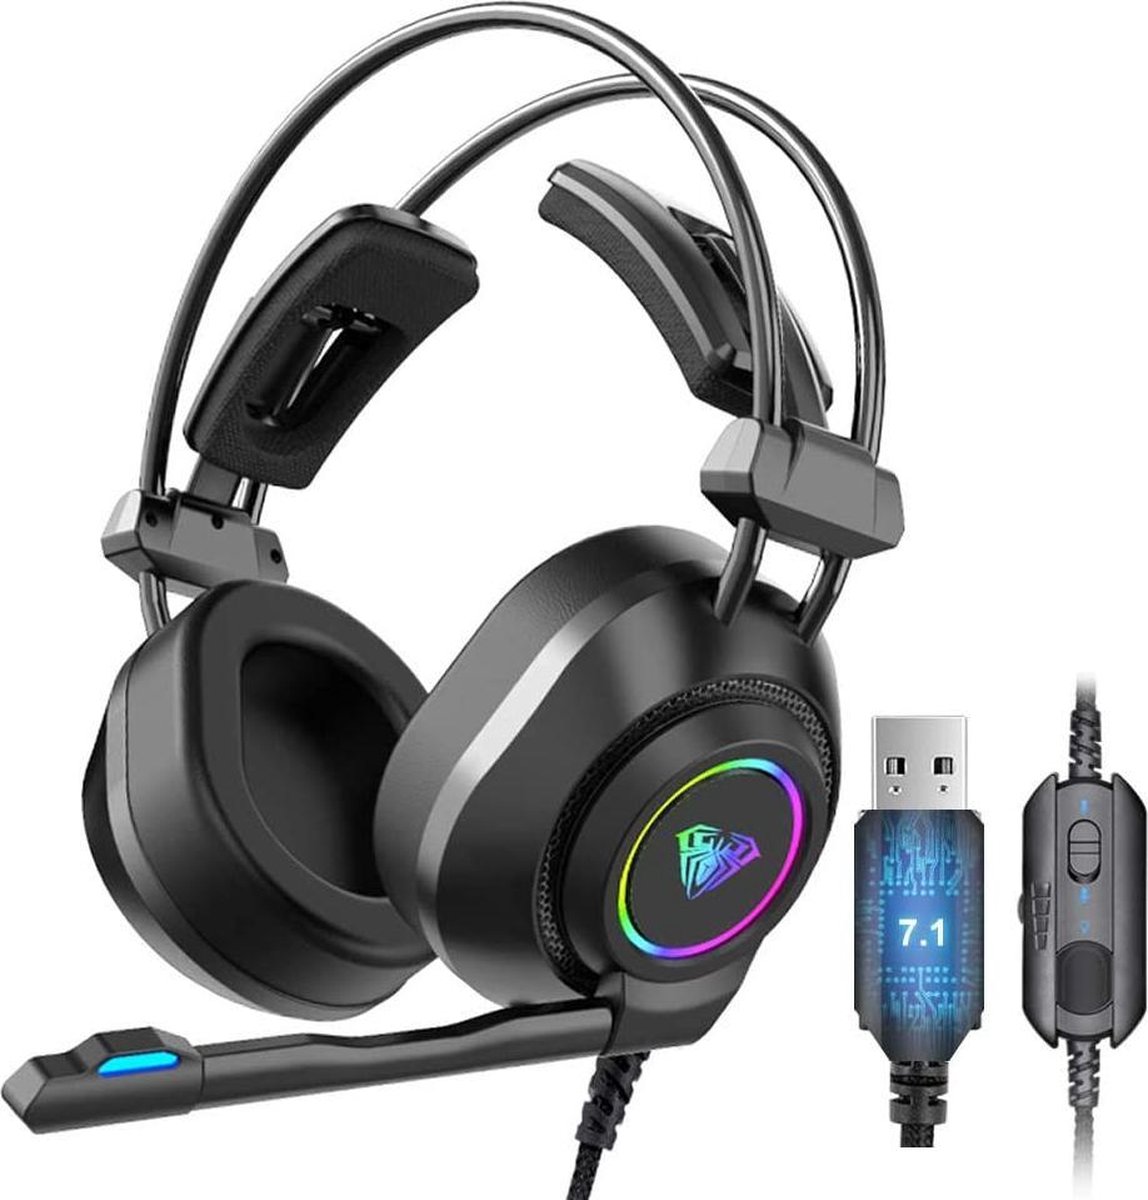 AULA S600 USB RGB Verlichting Gaming headset - 7.1 Surround Sound - Multi platform (PC,laptop,PS4 etc.) - Zwart